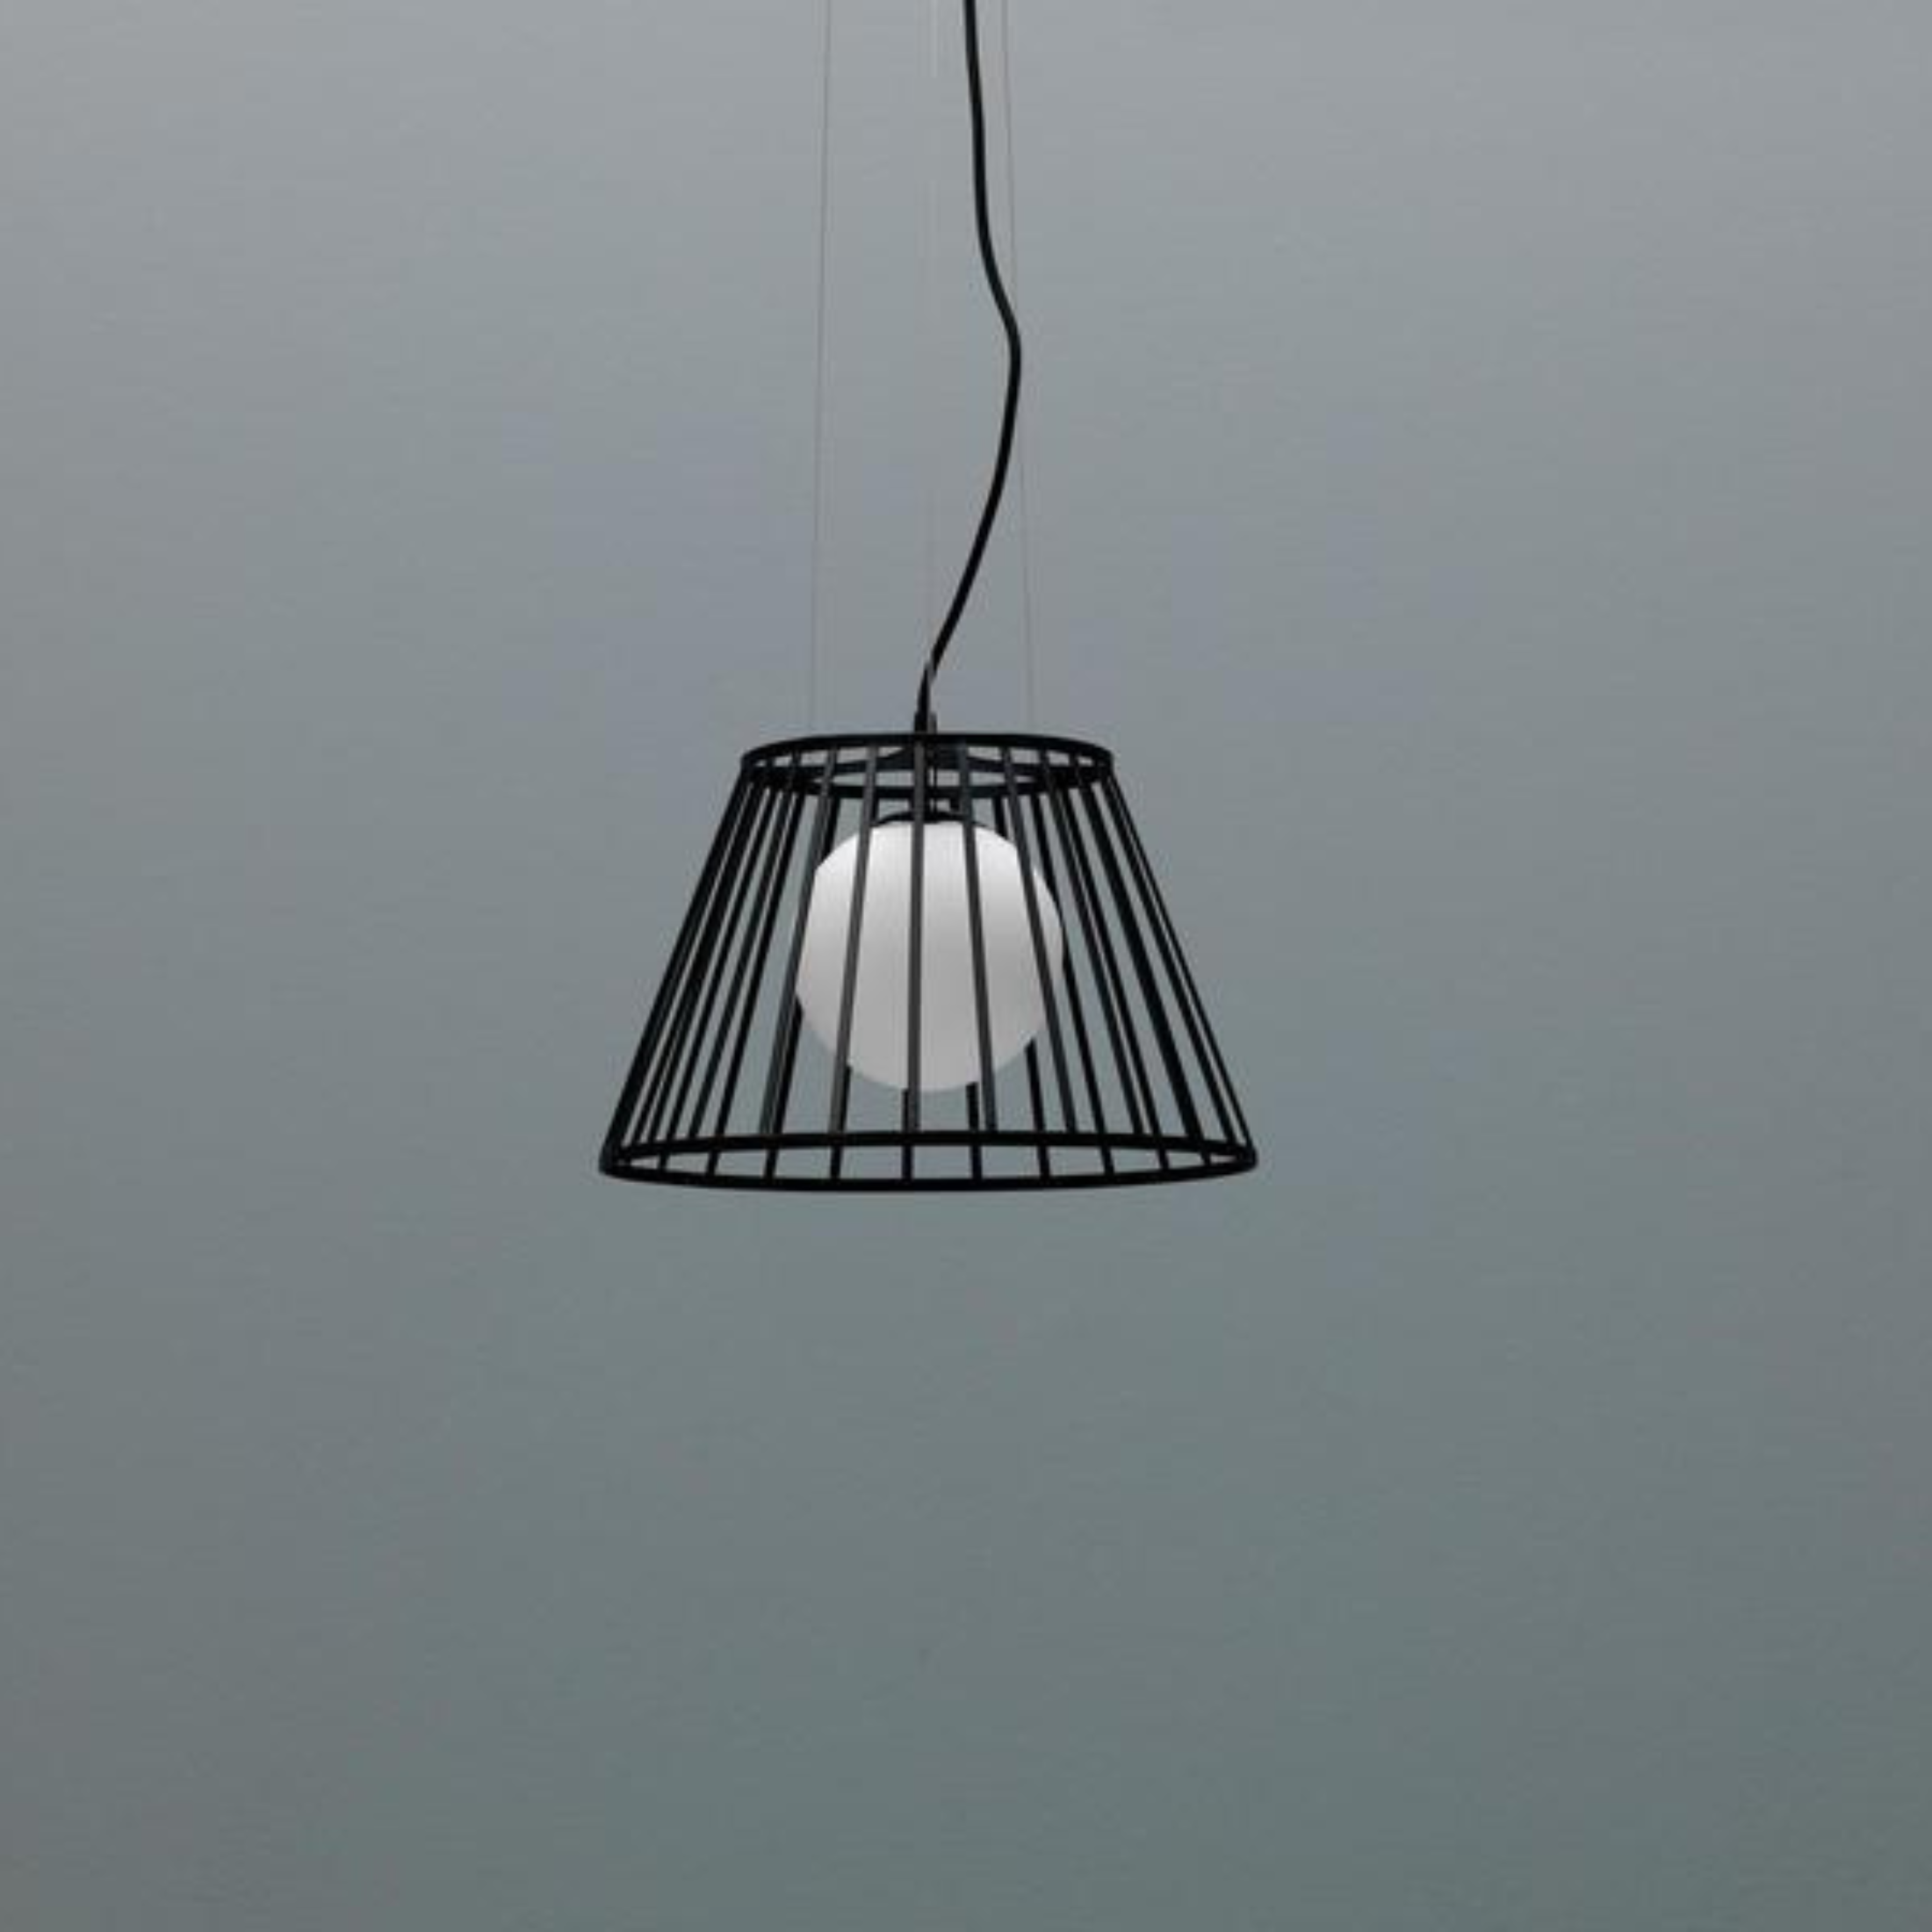 Lampada a sospensione in metallo nero "Cage" cavo regolabile cm 35x35 120h